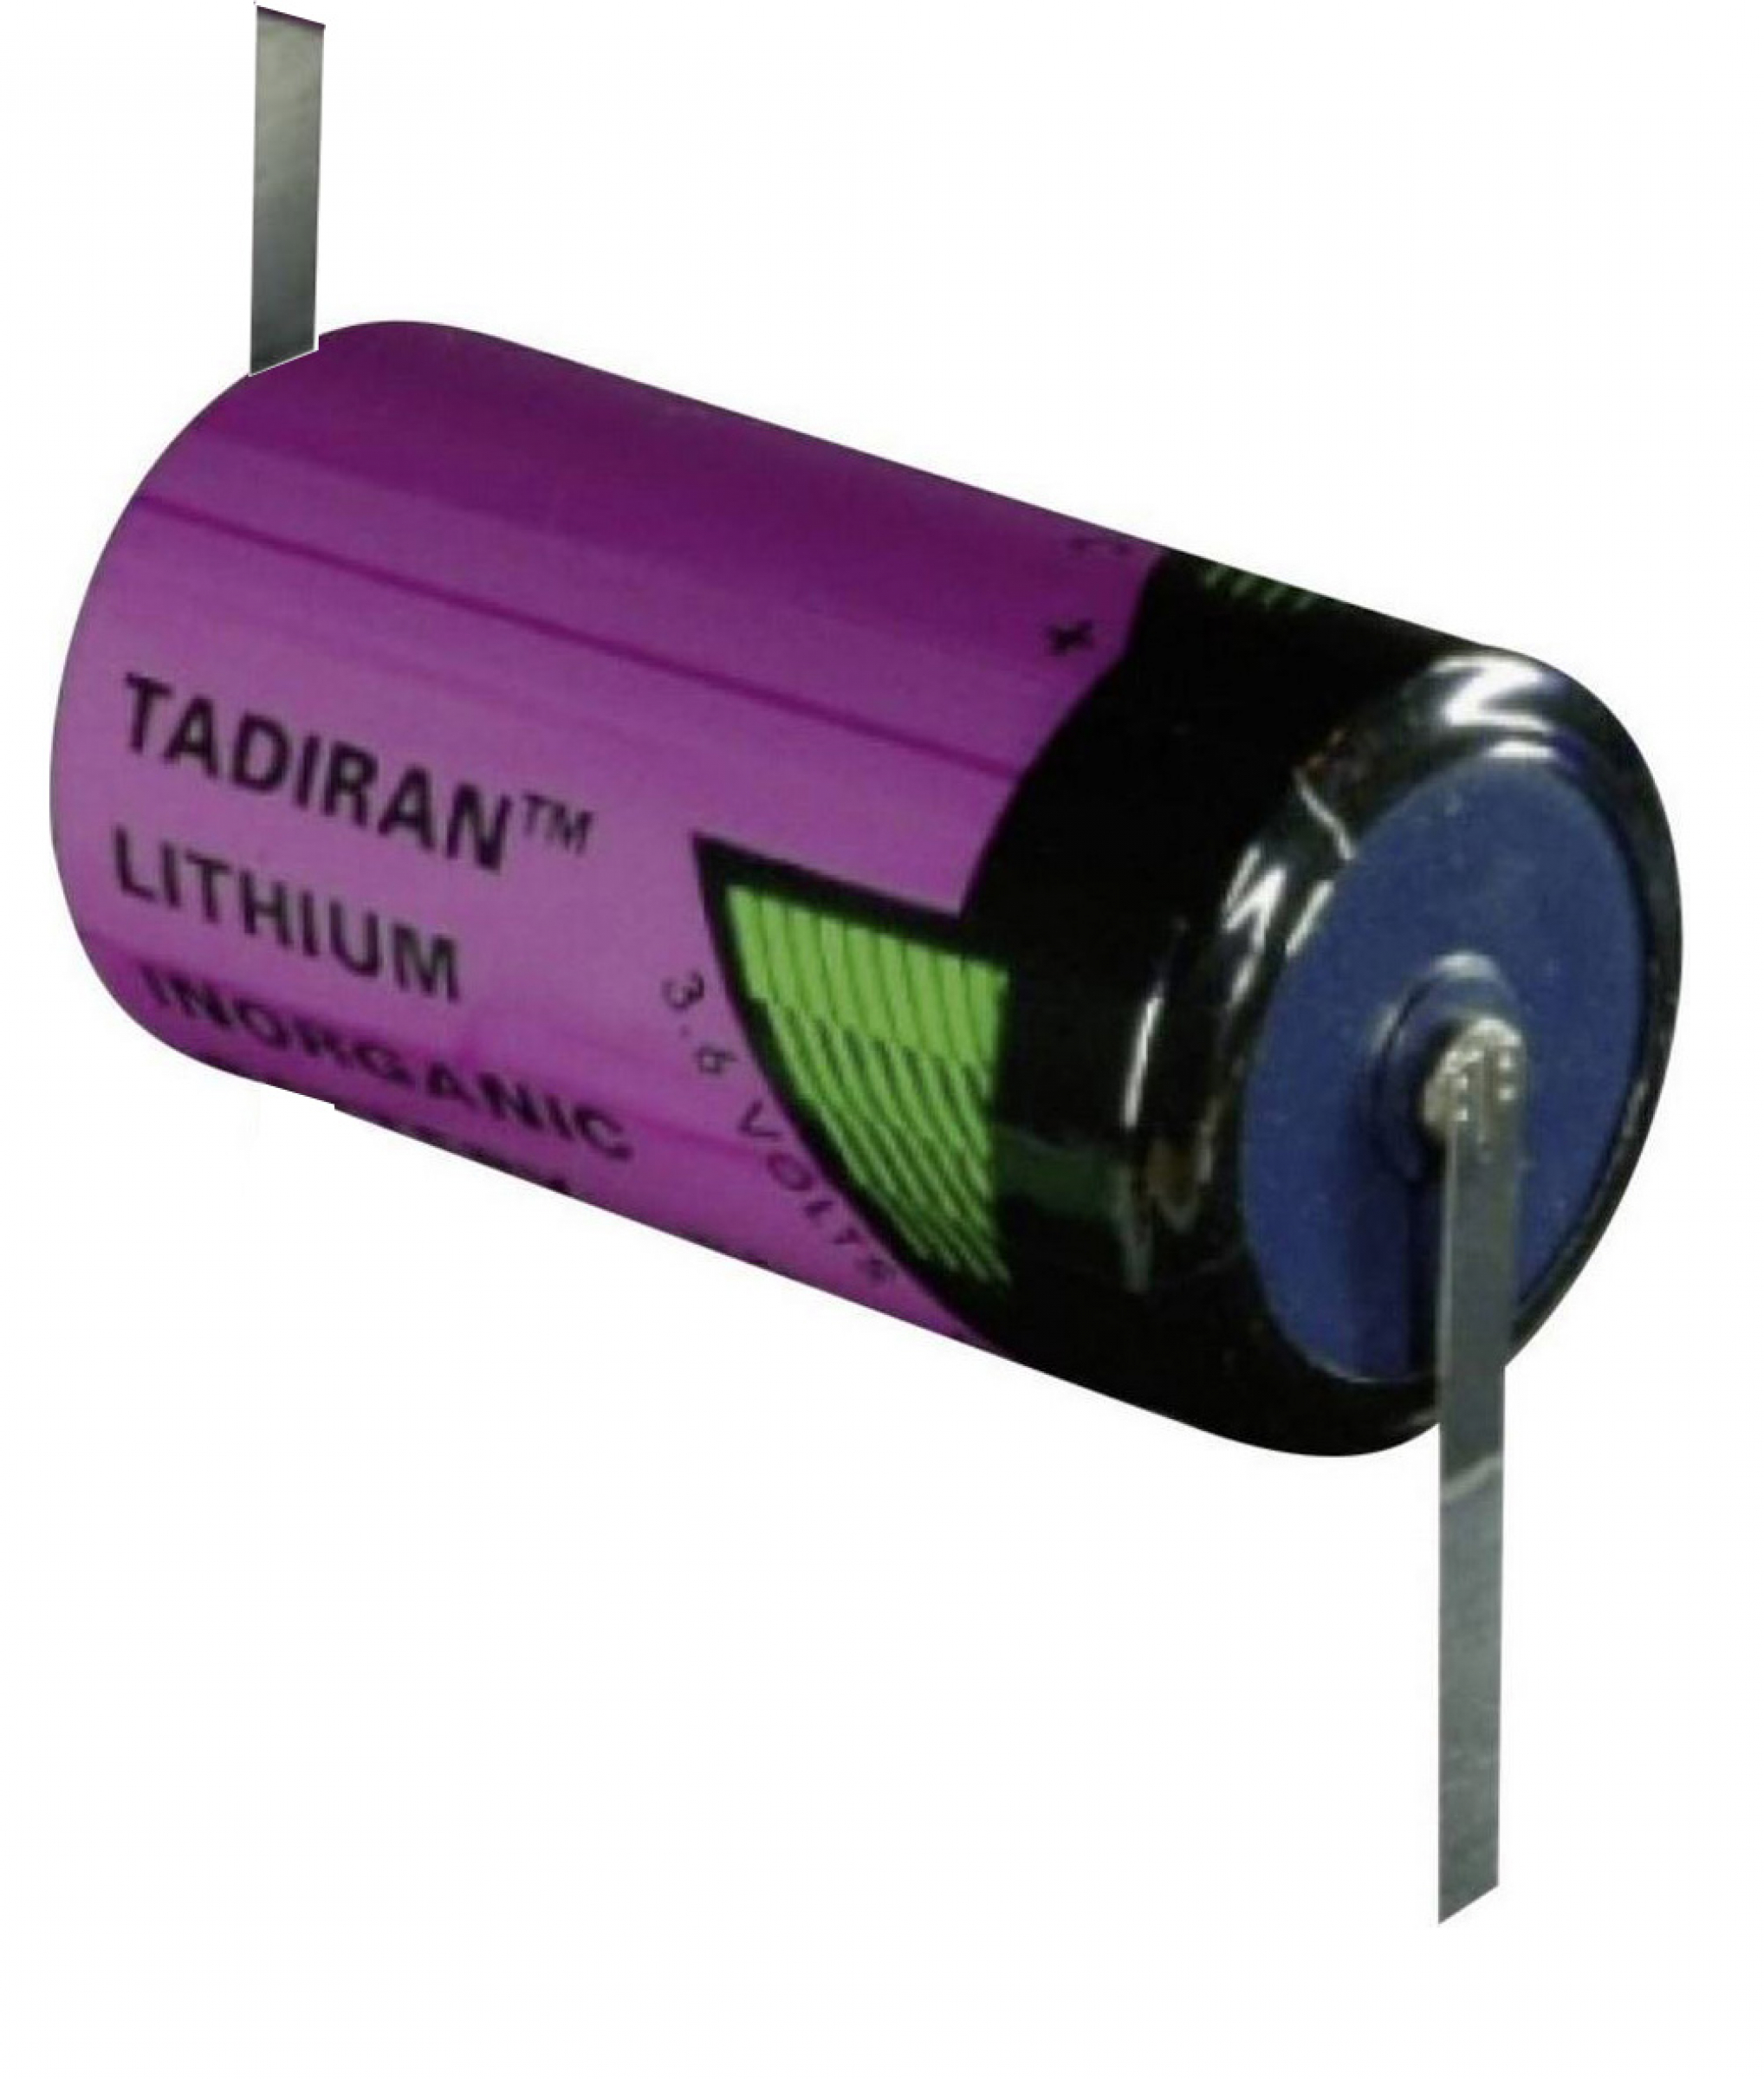 Tadiran 2770 ER-C Inorganic Lithium 3,6V with Z-Tags